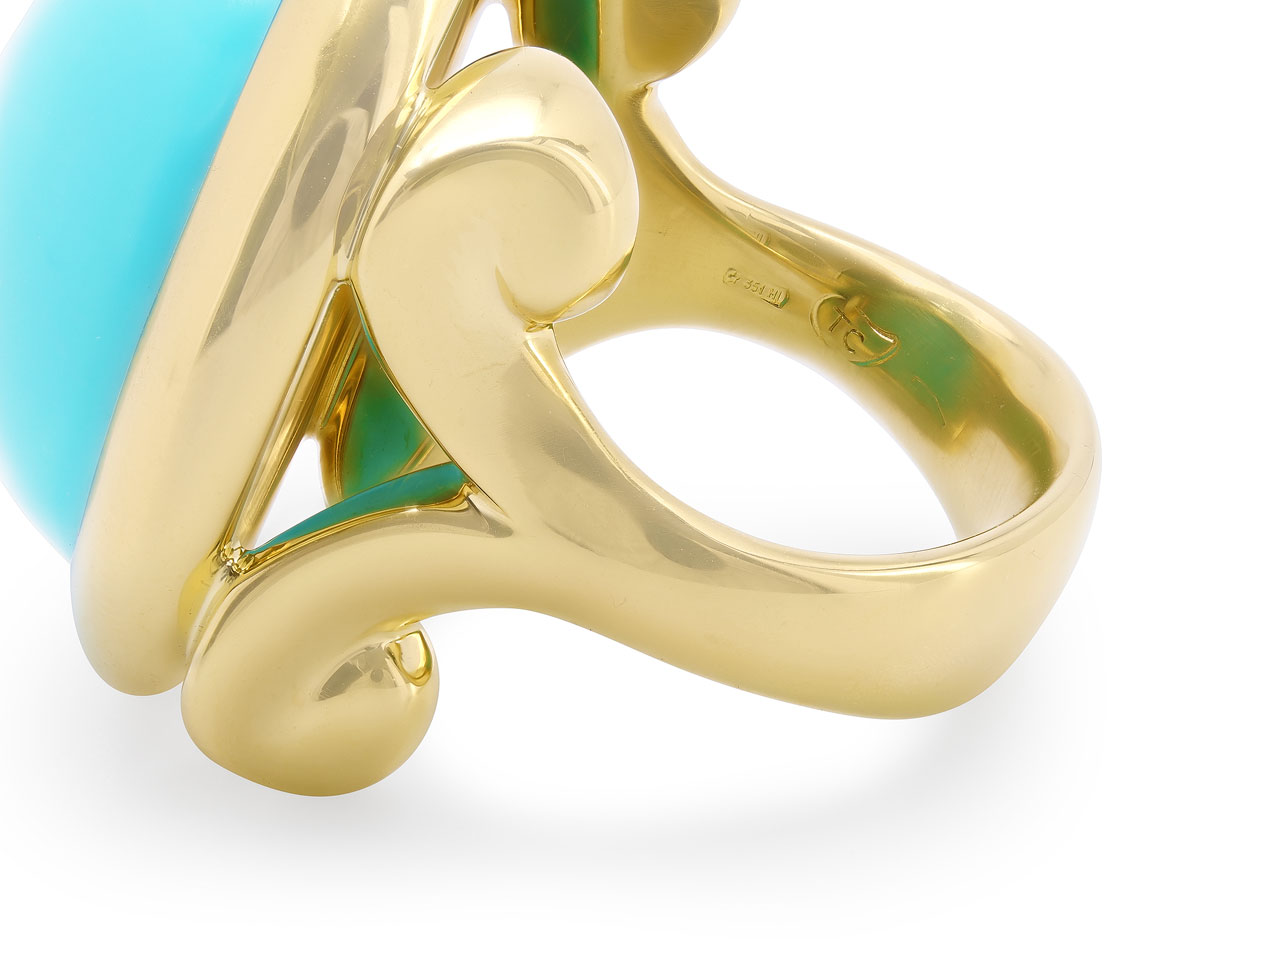 Tamara Comolli 'Hippie Glam' Turquoise Ring in 18K Gold